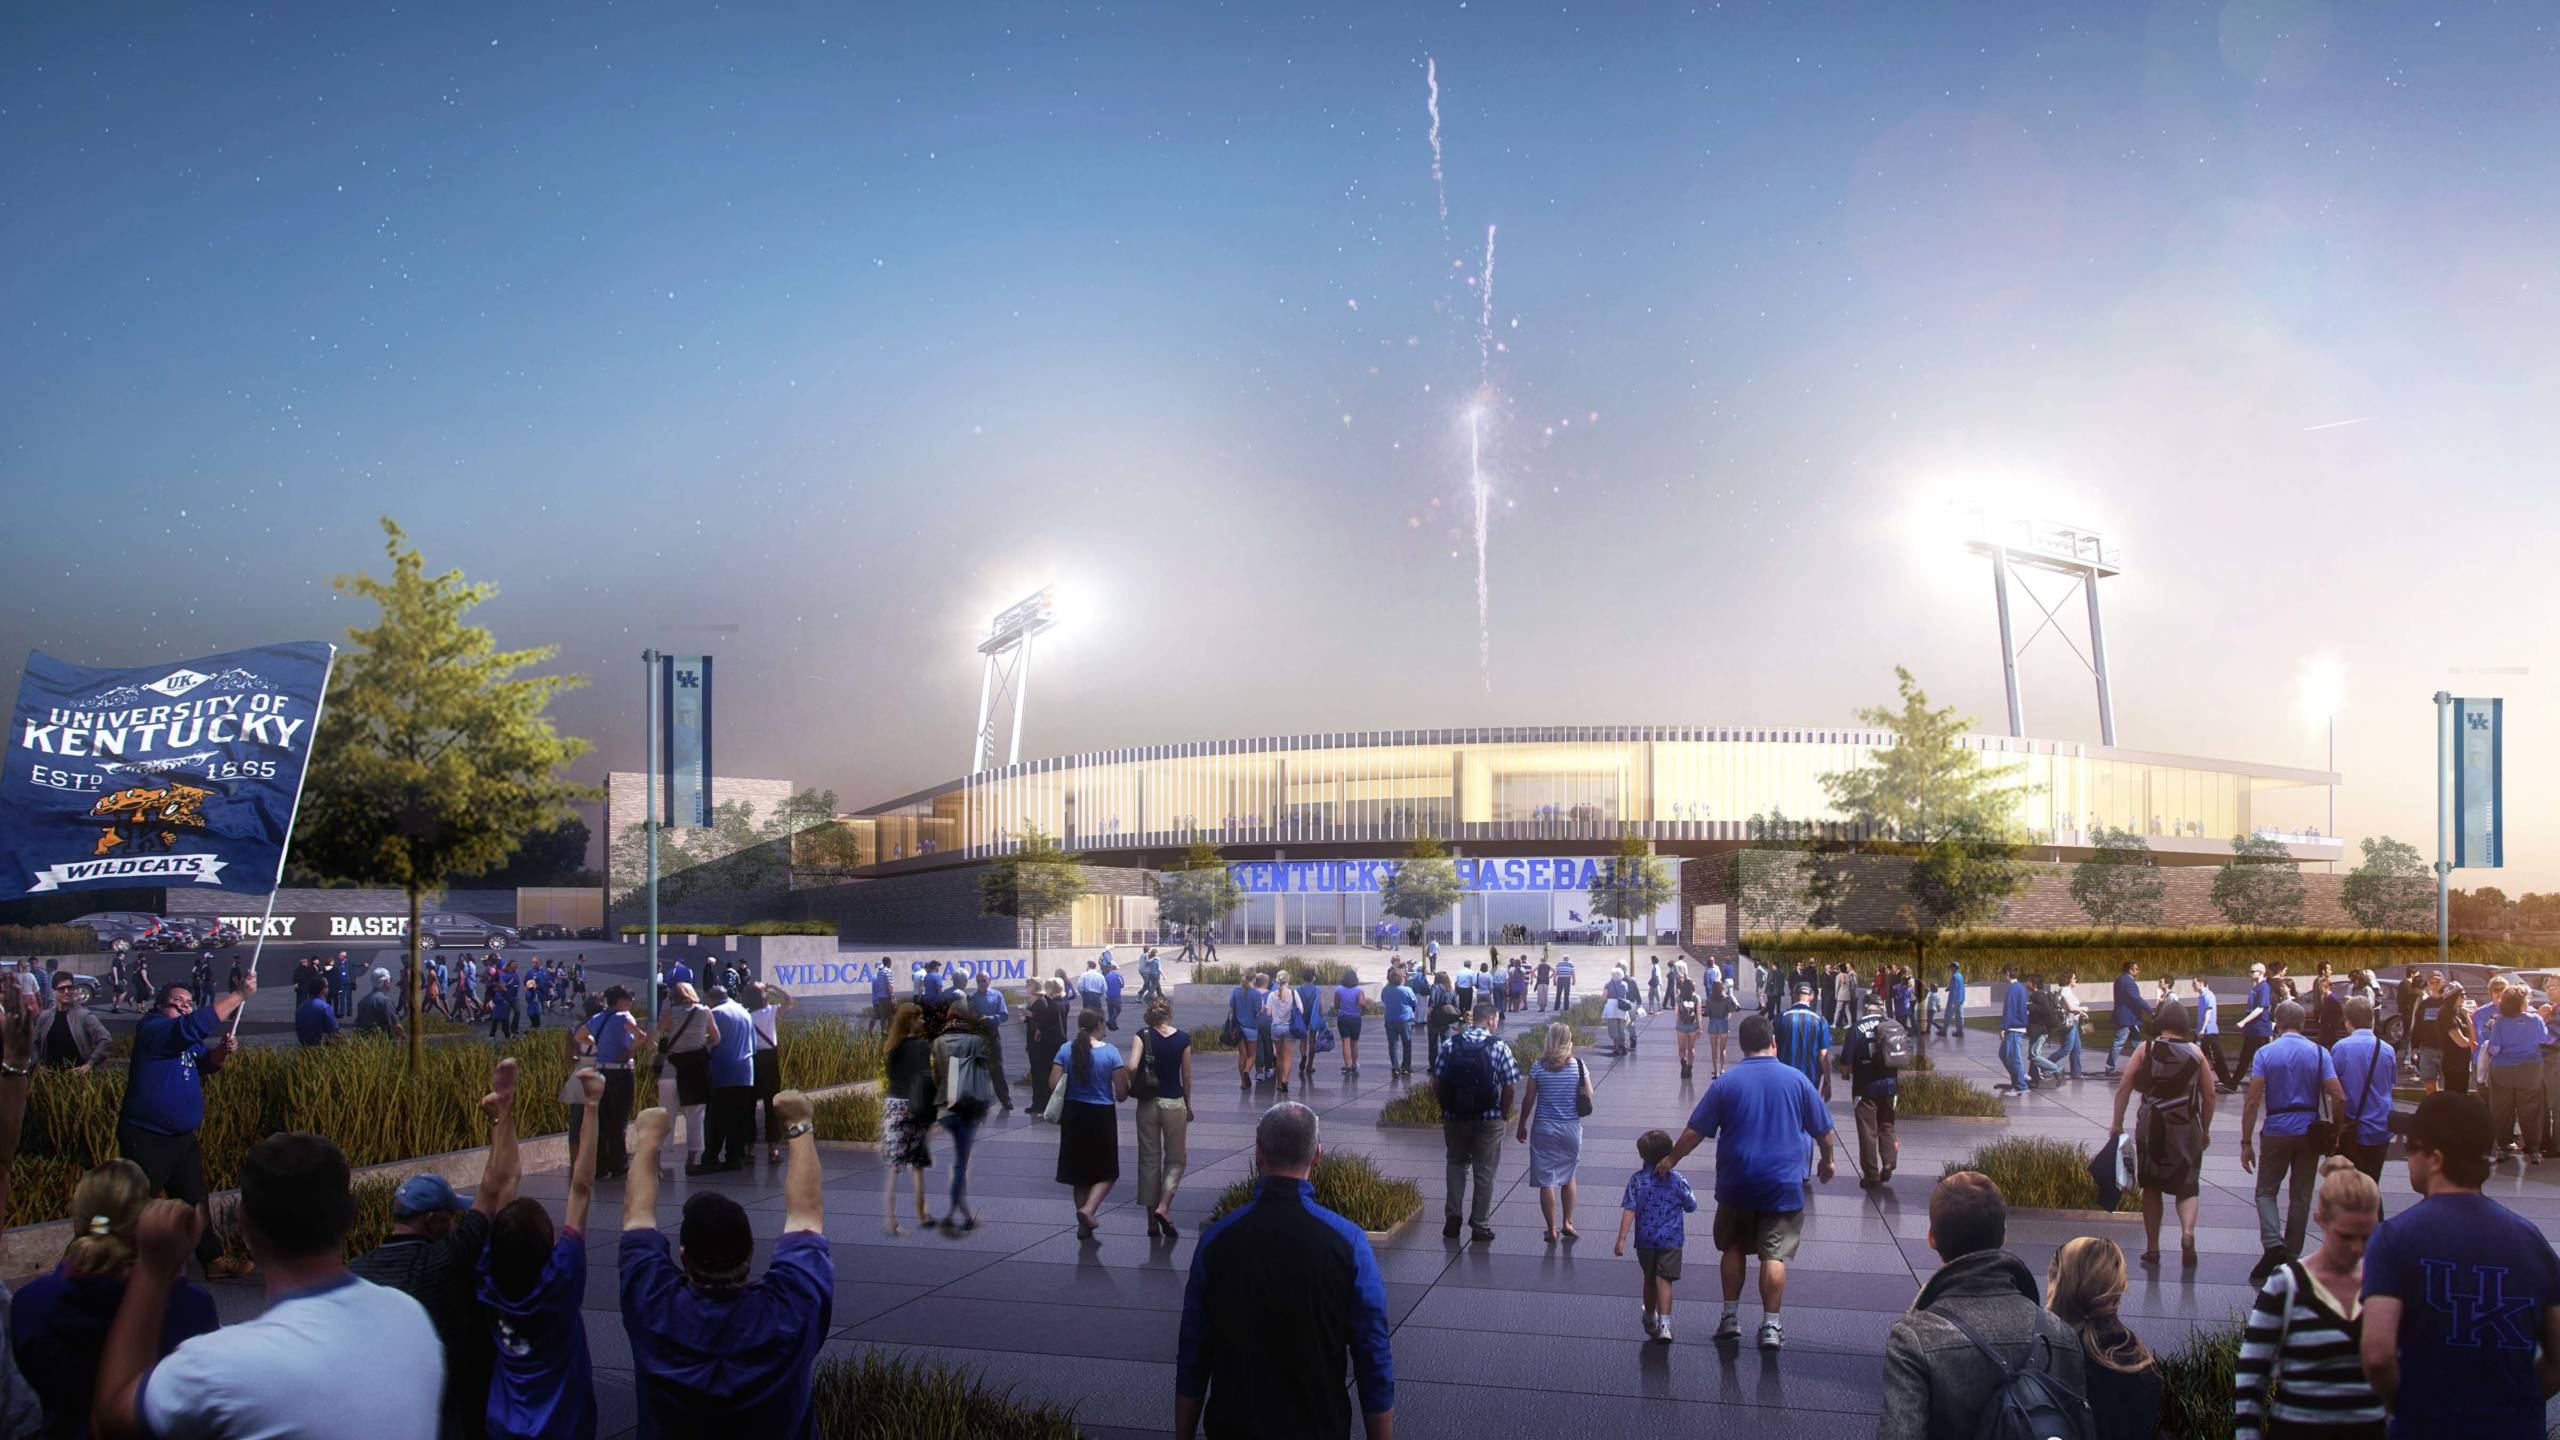 Construction on New Baseball Stadium to Begin in February